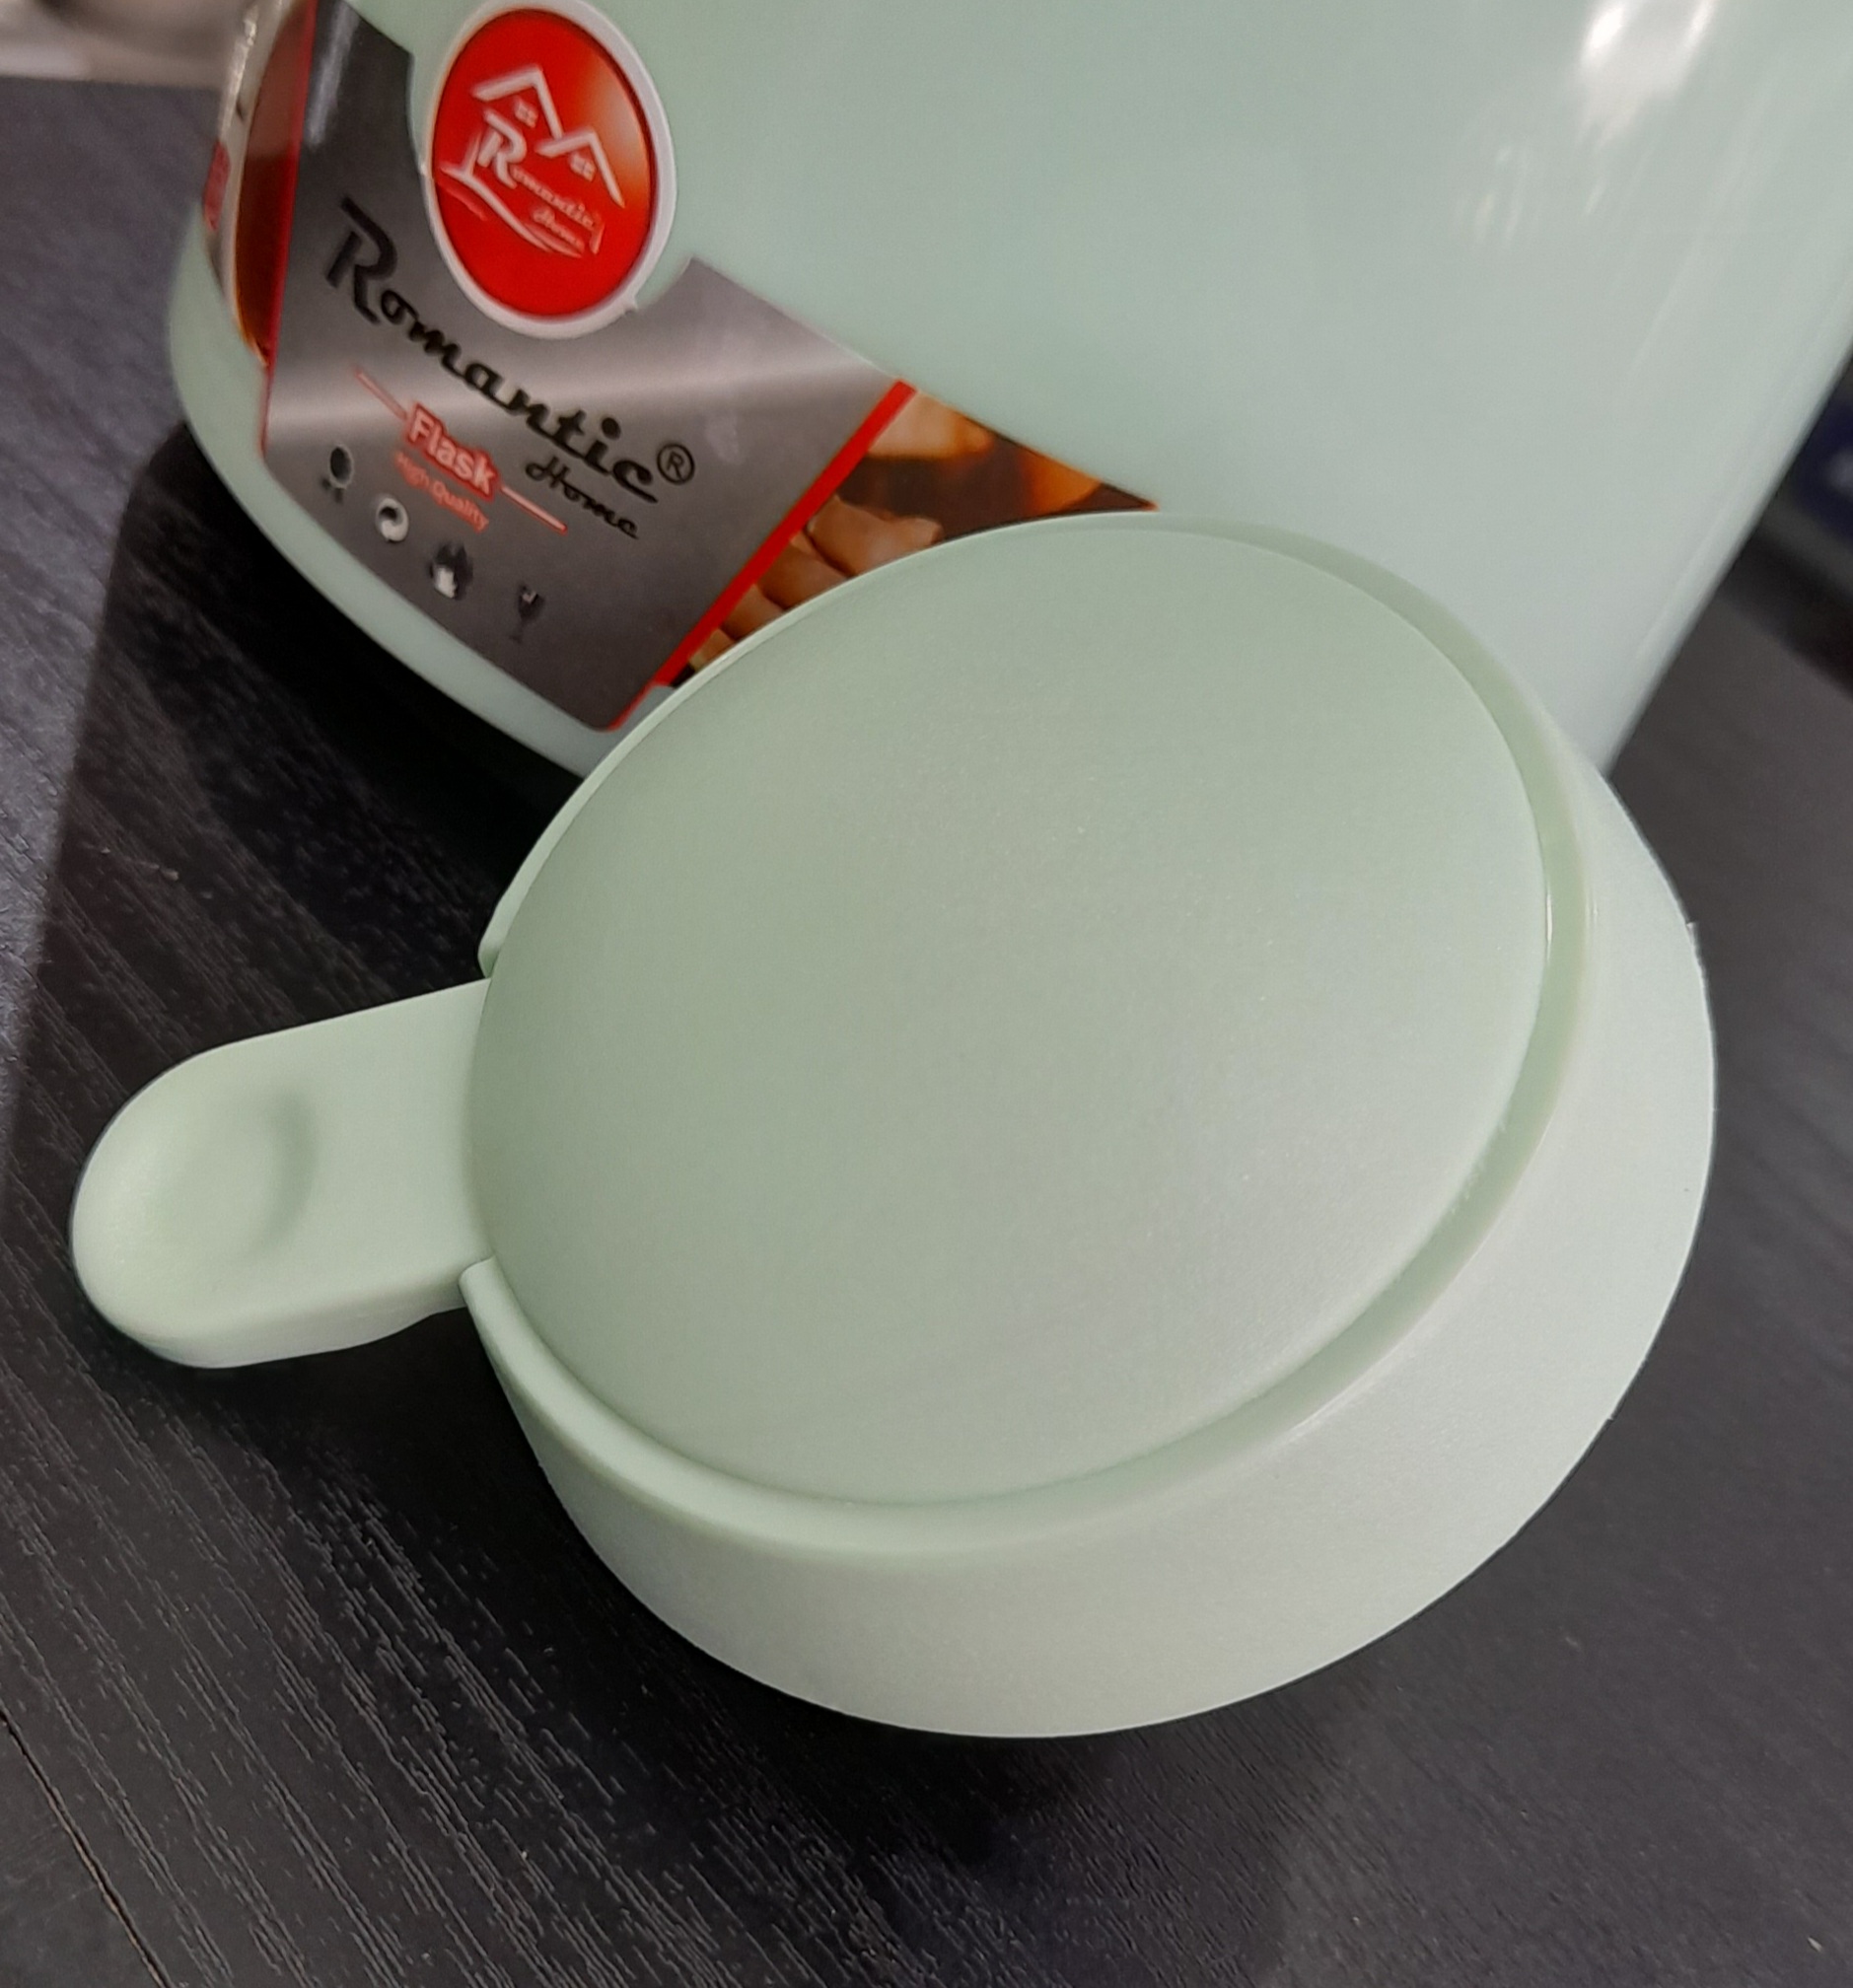 فلاسک چای زال ۱لیتر